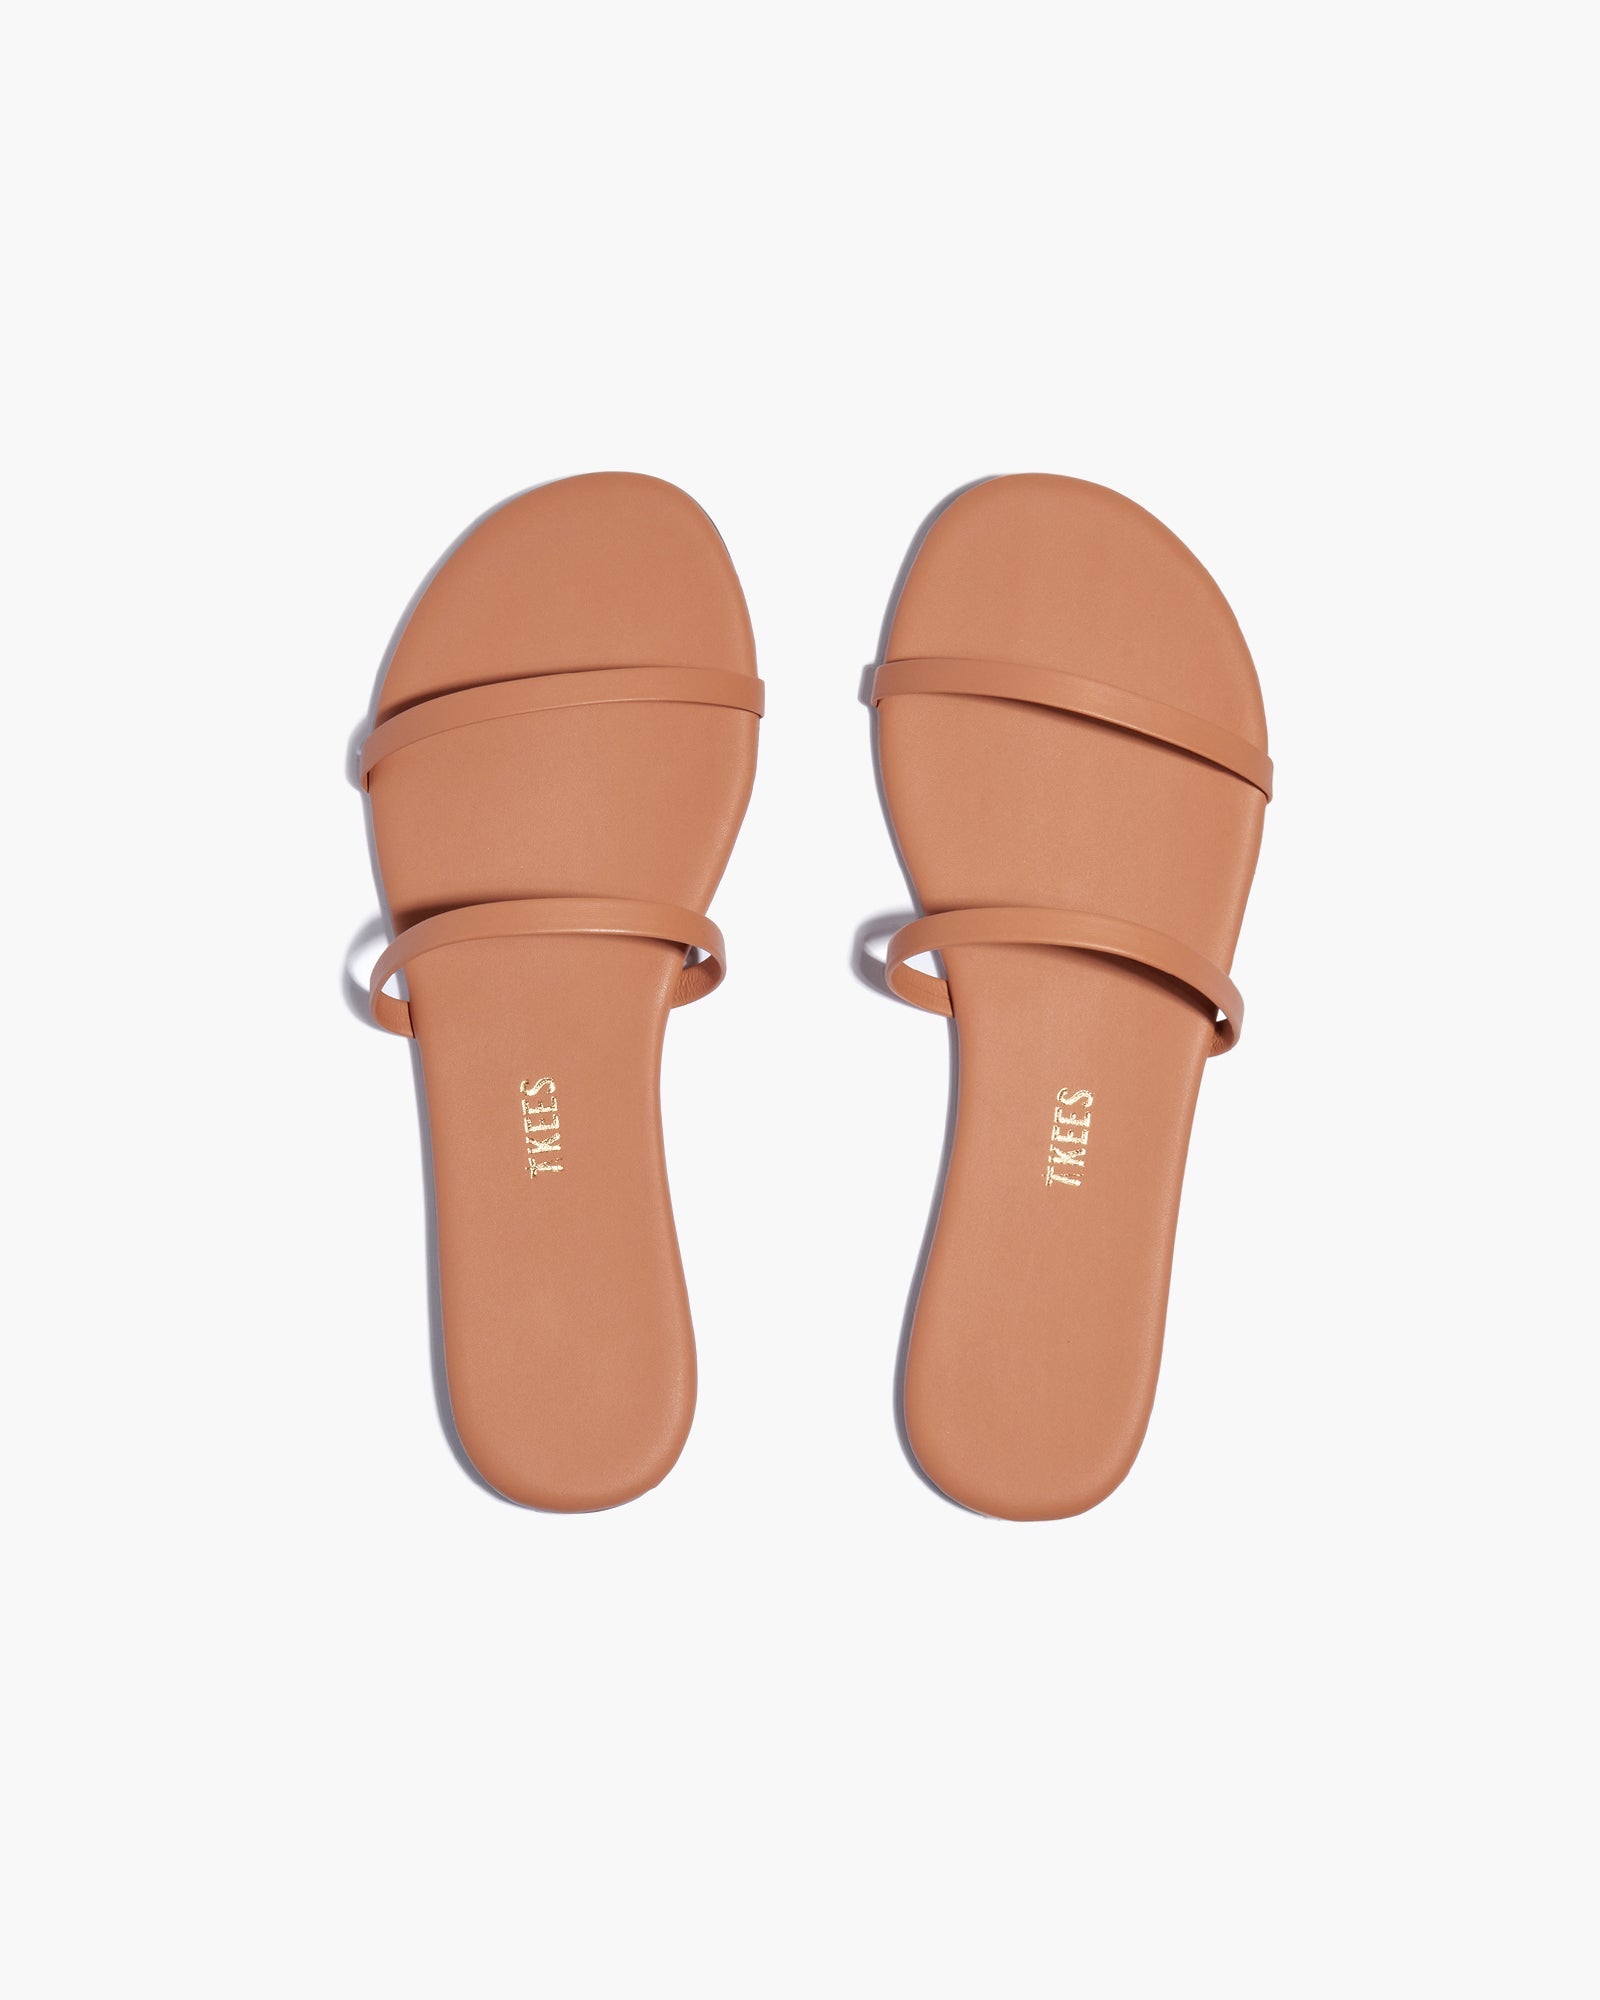 Rose Gold Women's TKEES Gemma Pigments Sandals | KUOAHZ680